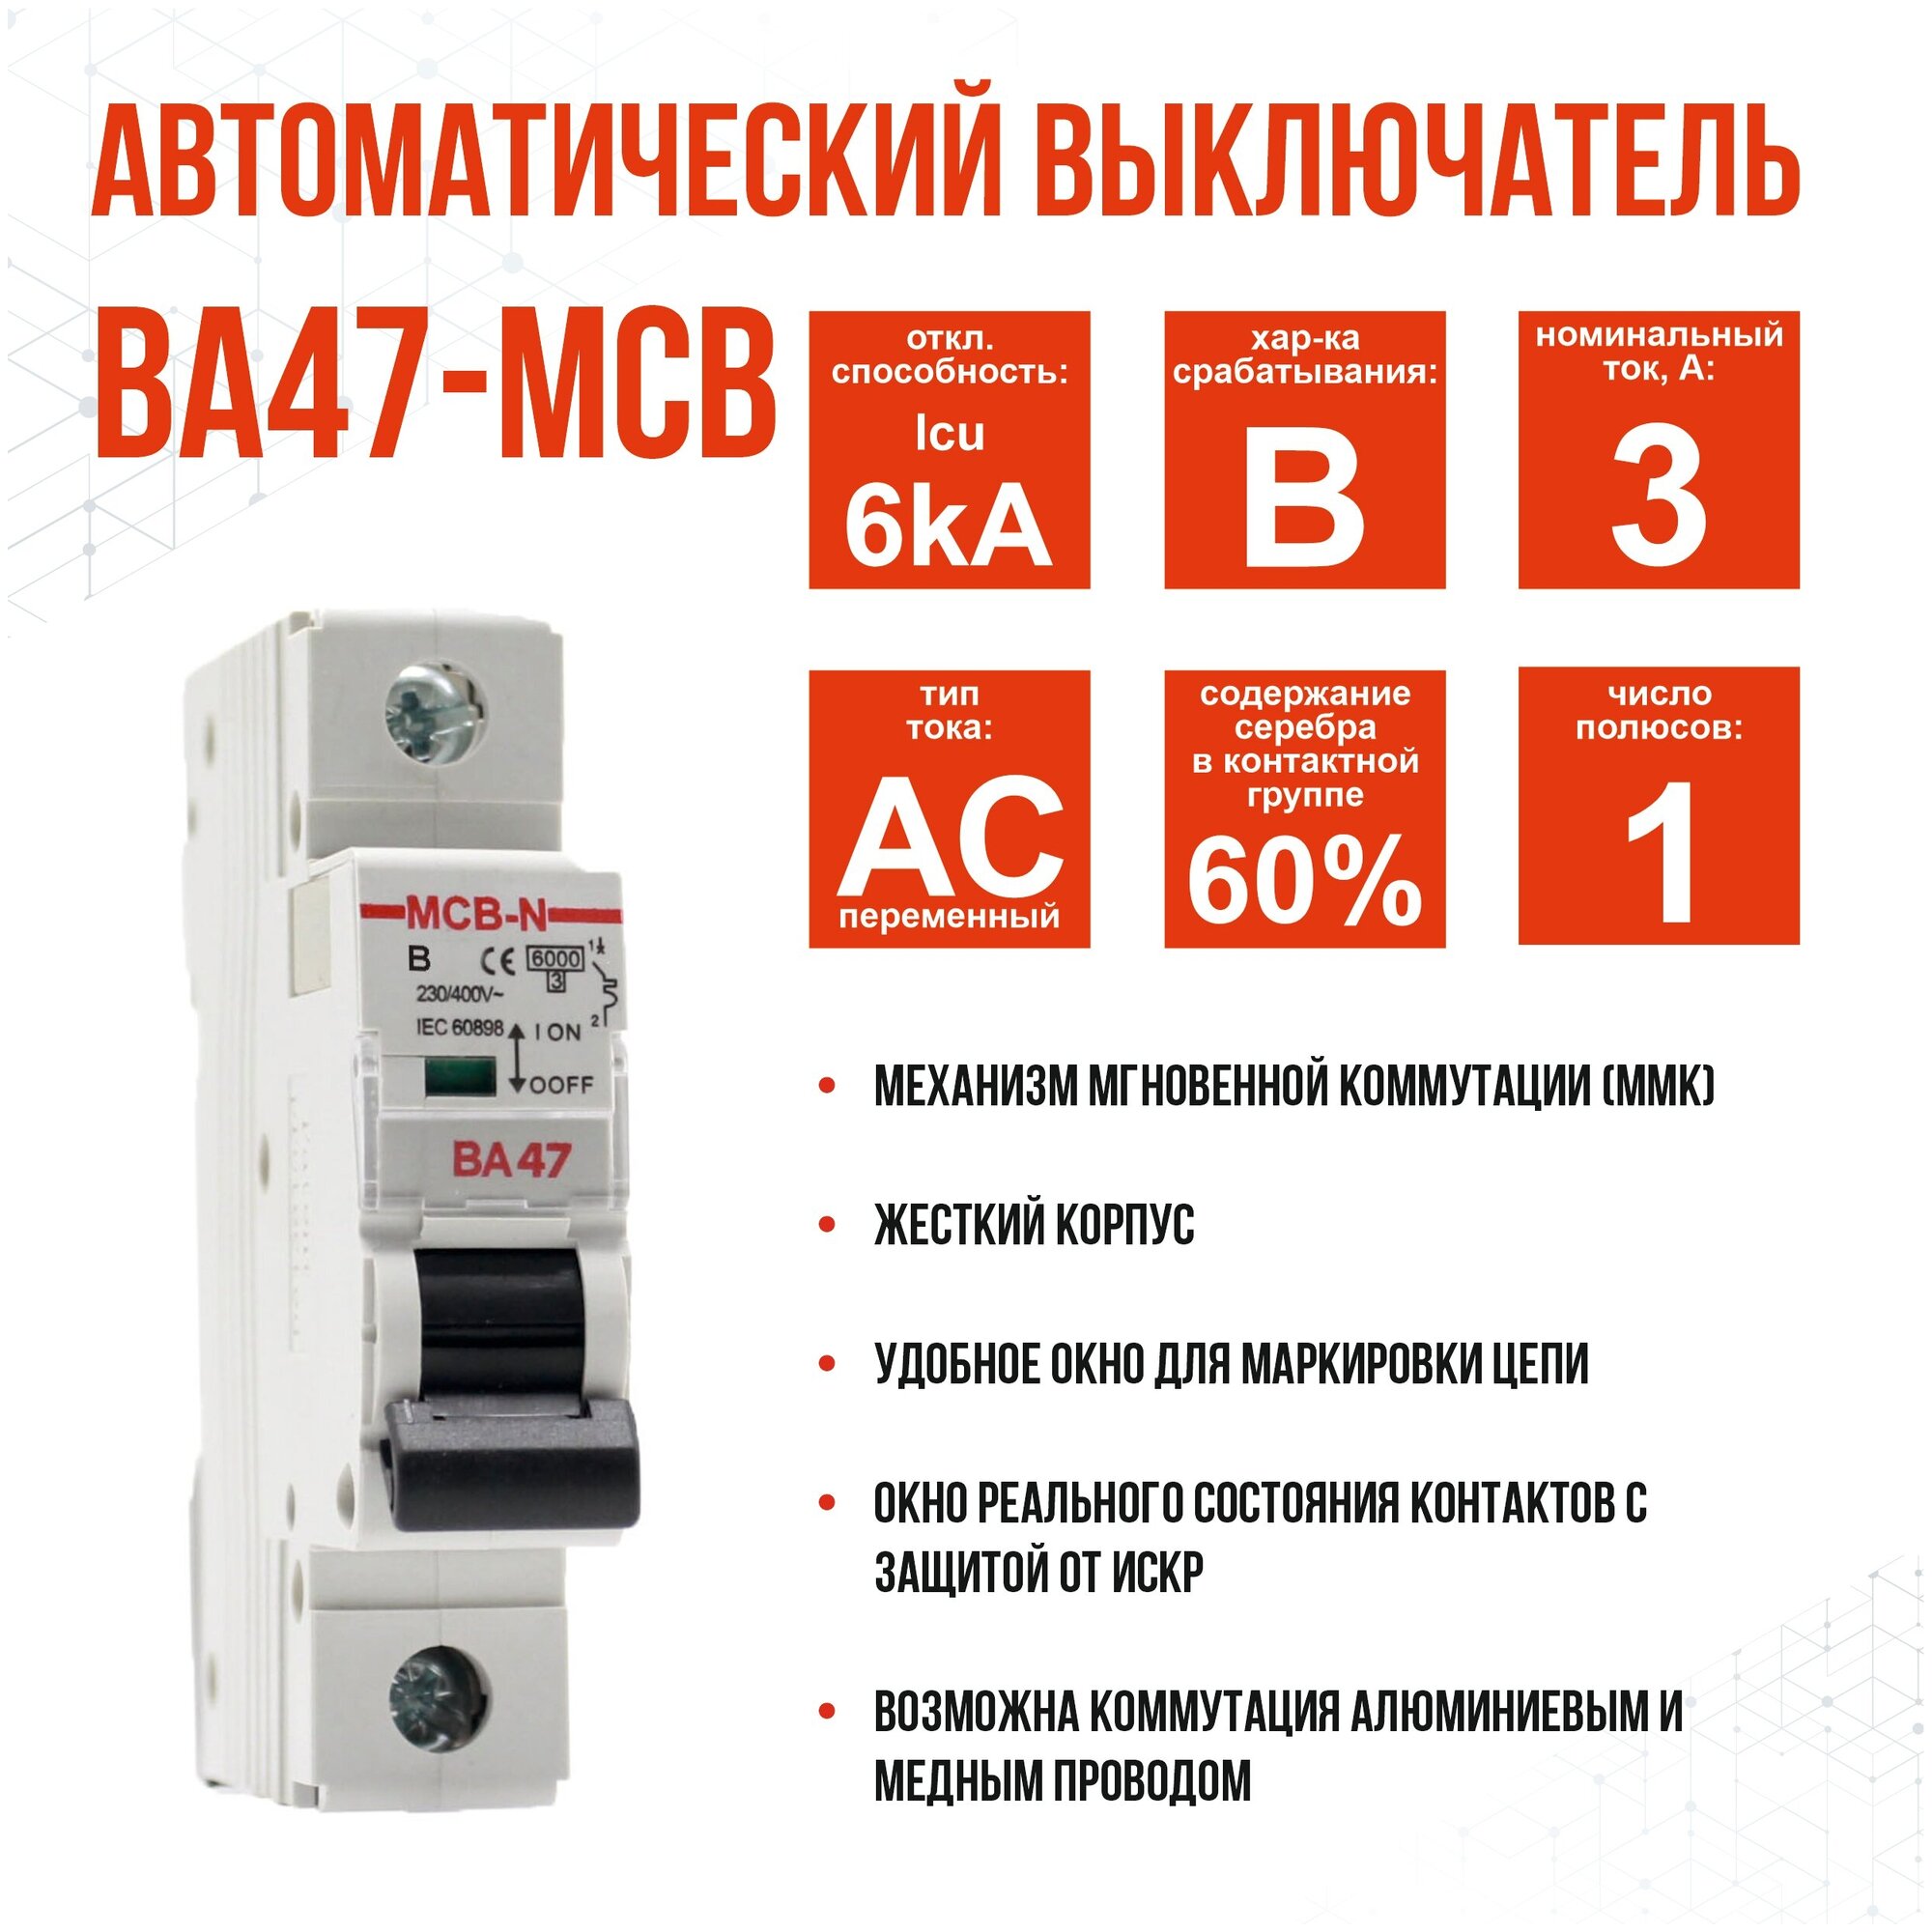 Выключатель автоматический AKEL ВА47-MCB-N-1P-B3-AC, 1 шт.